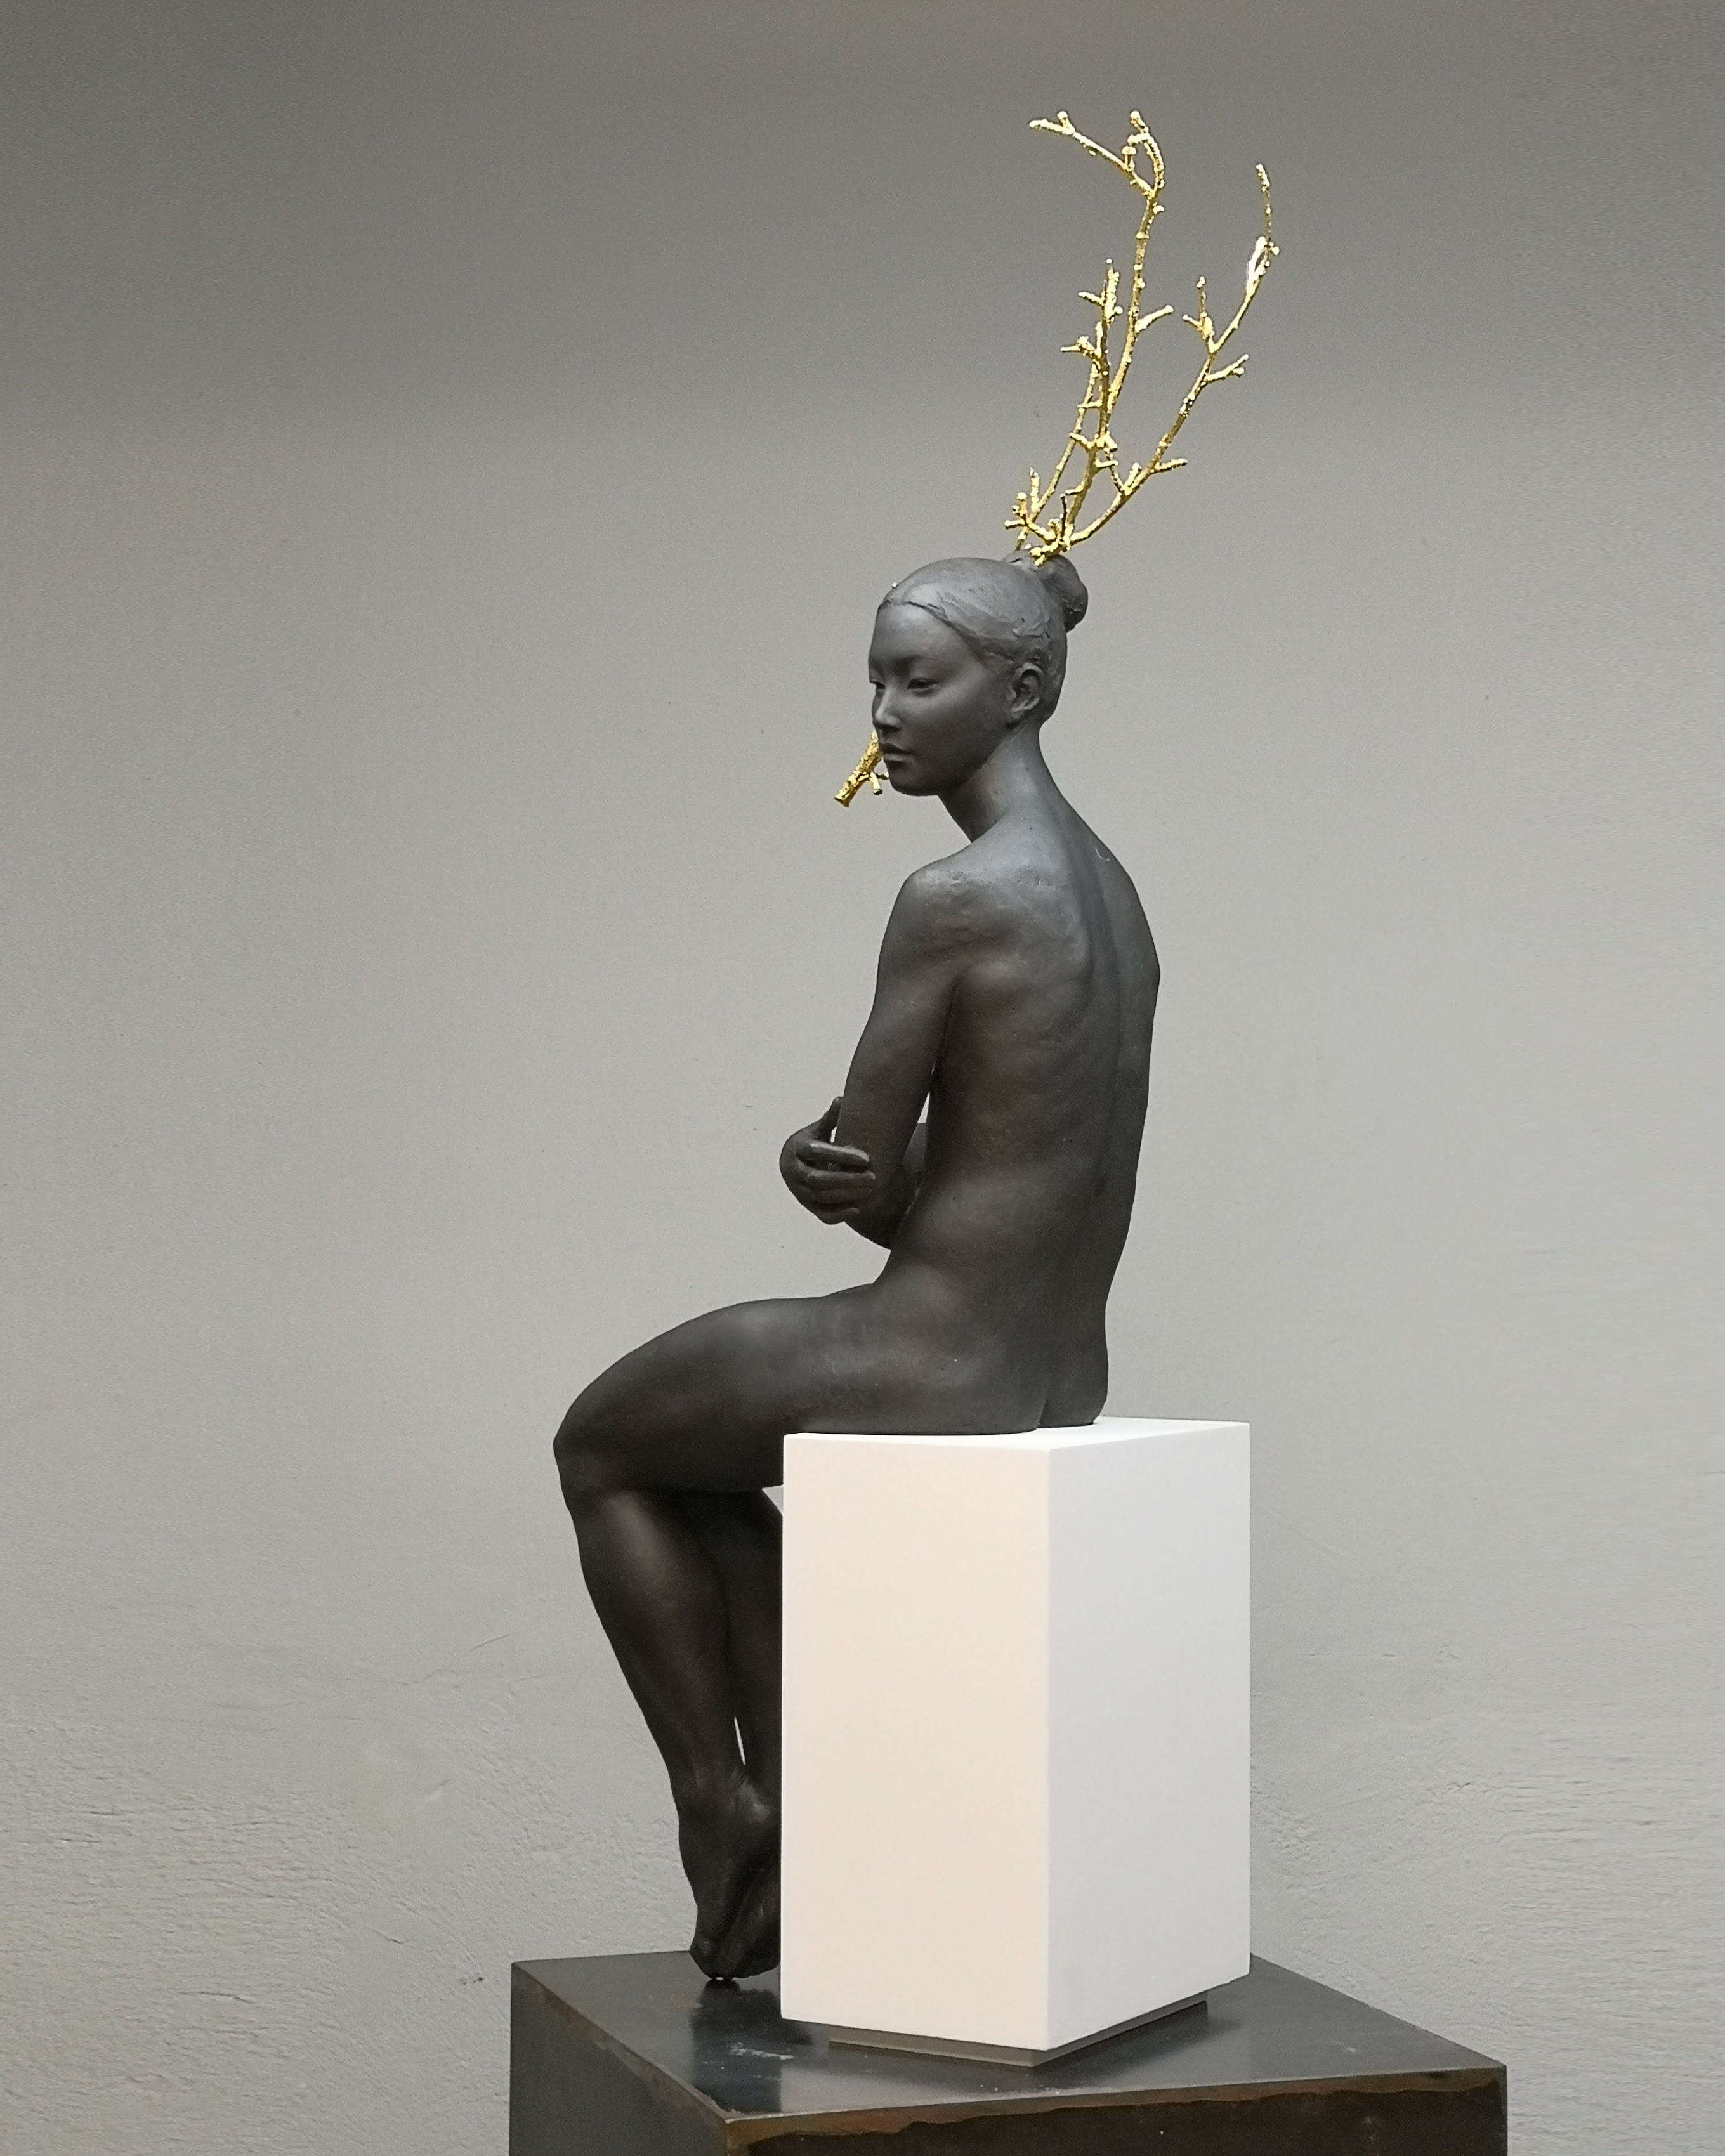 Coderch & Malavia Artiste<br />
Sculpture Bronze<br />
Haiku<br />
@ Marciano Contemporary